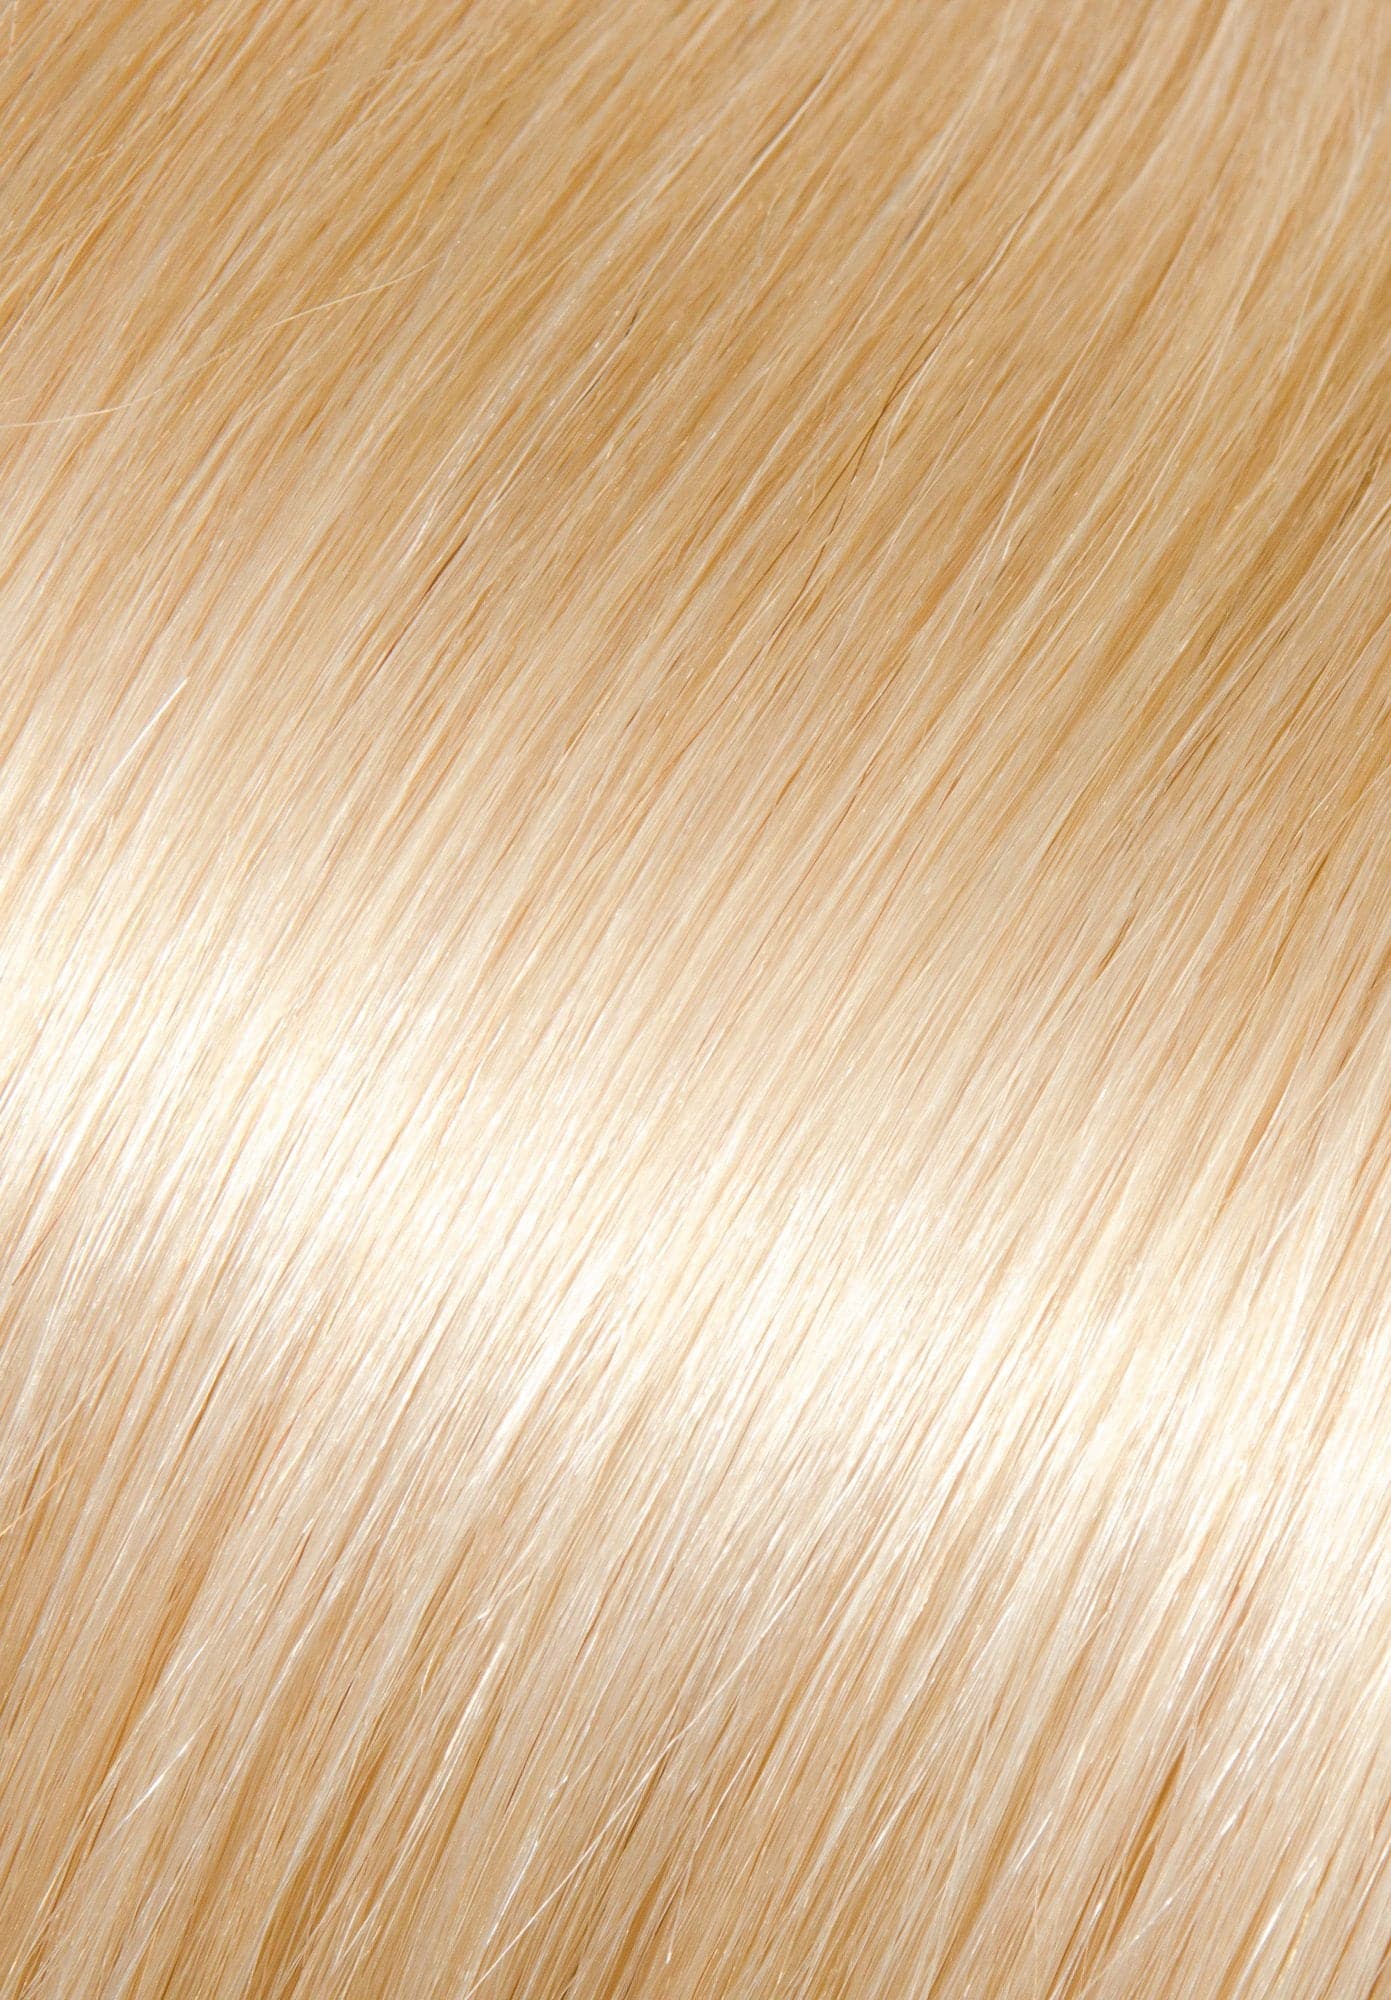 16" Premium Clip In Straight Color #1001 (Platinum Blond) - Donna Bella Hair